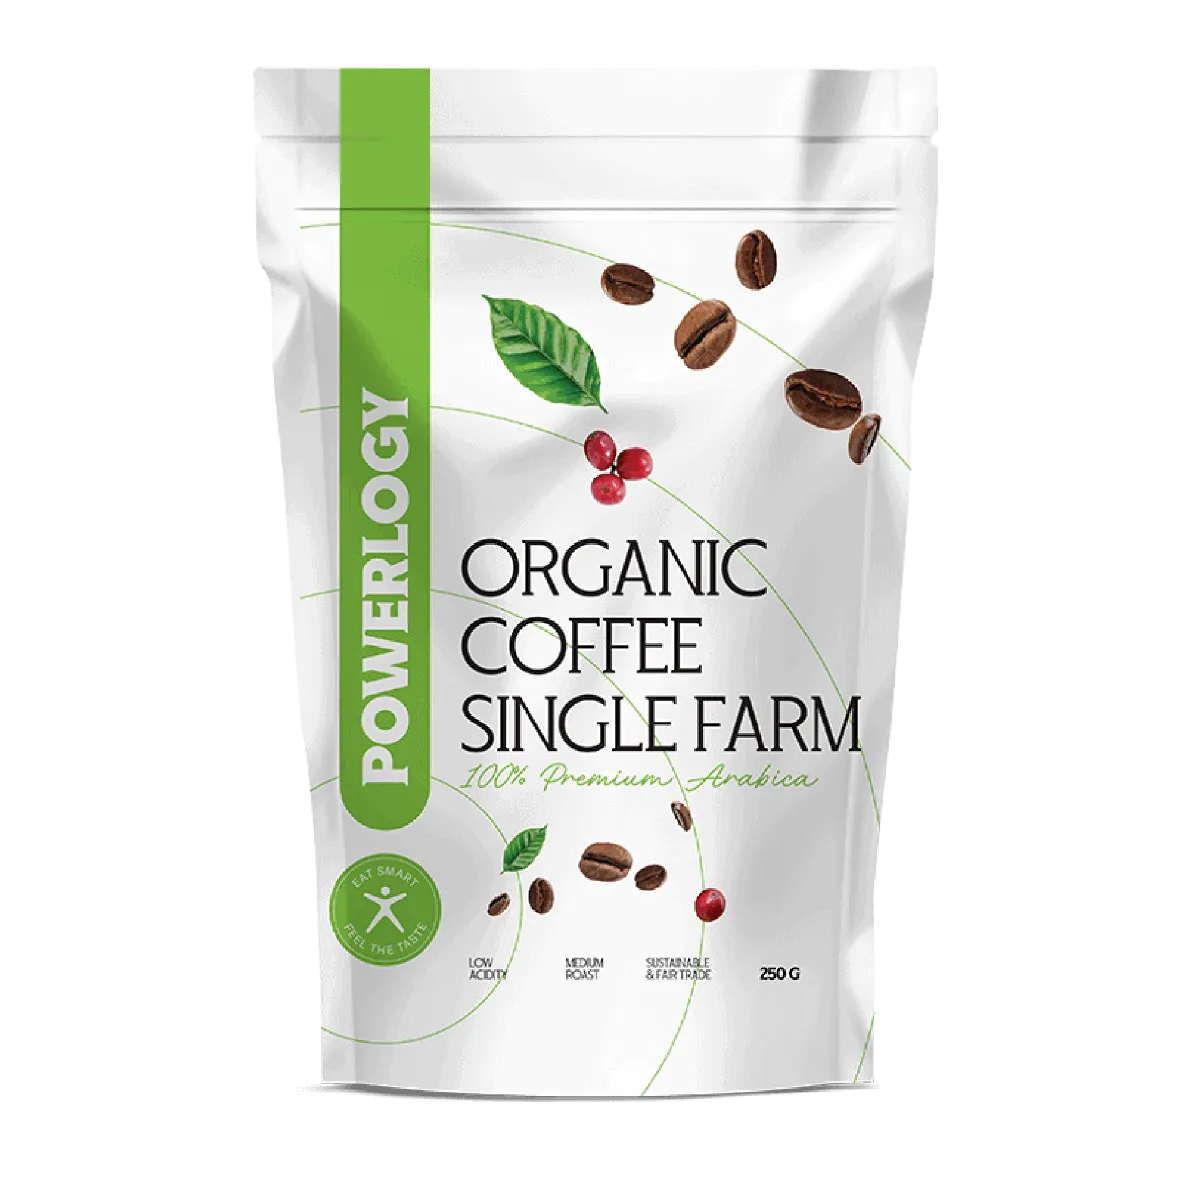 Powerlogy Organic Coffee 250 g